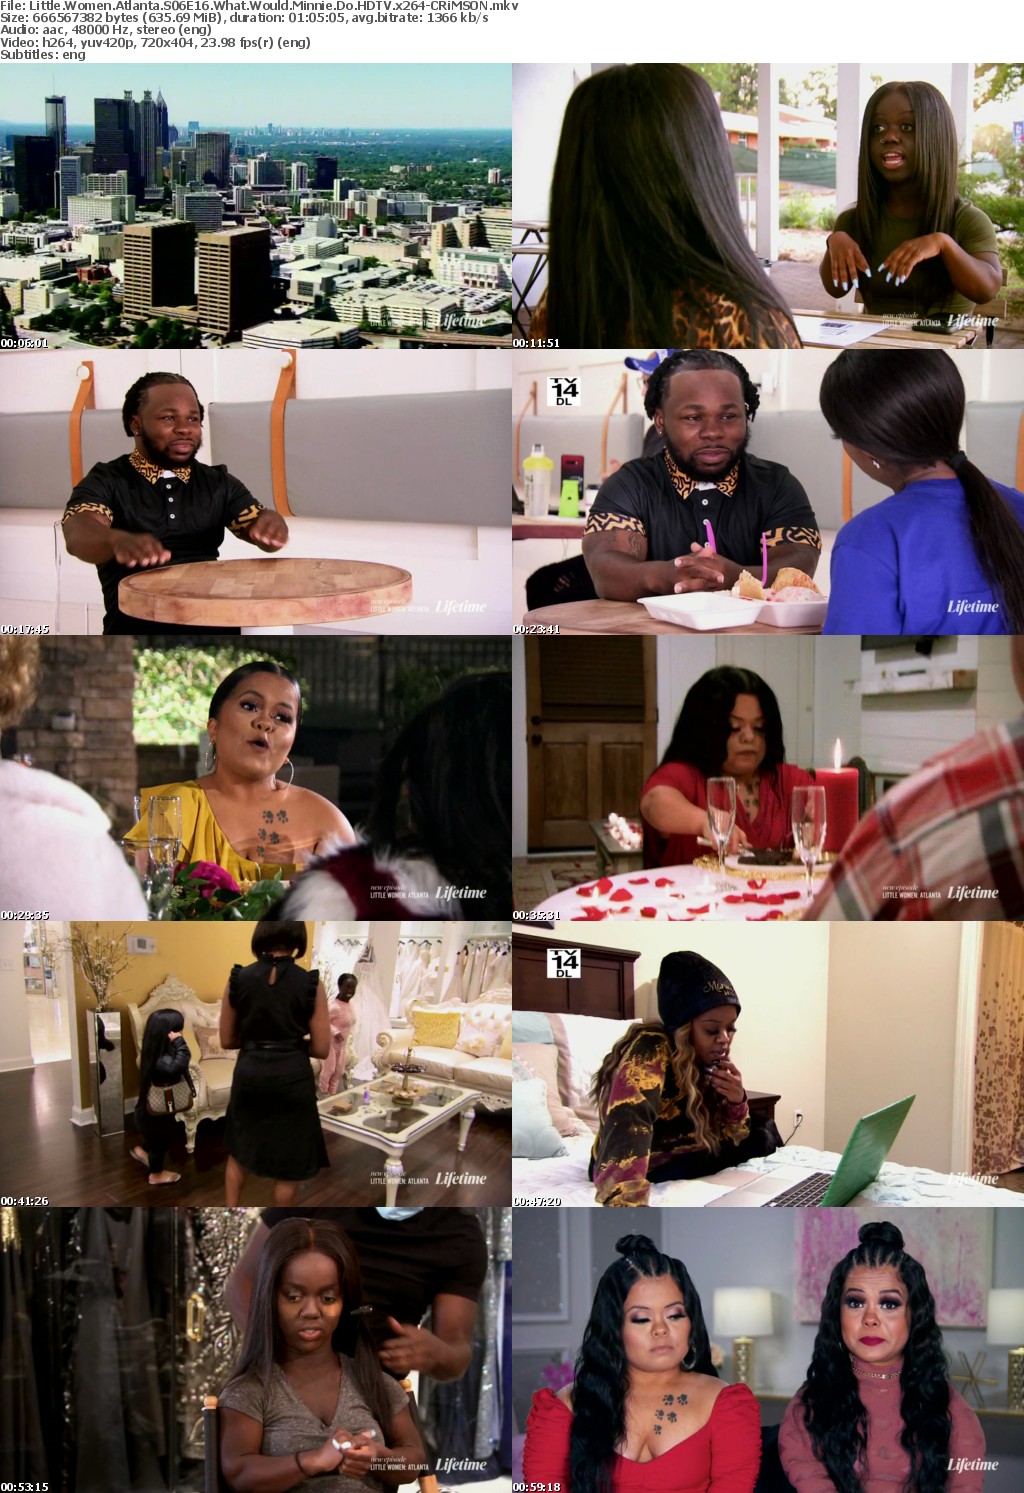 Little Women Atlanta S06E16 What Would Minnie Do HDTV x264-CRiMSON